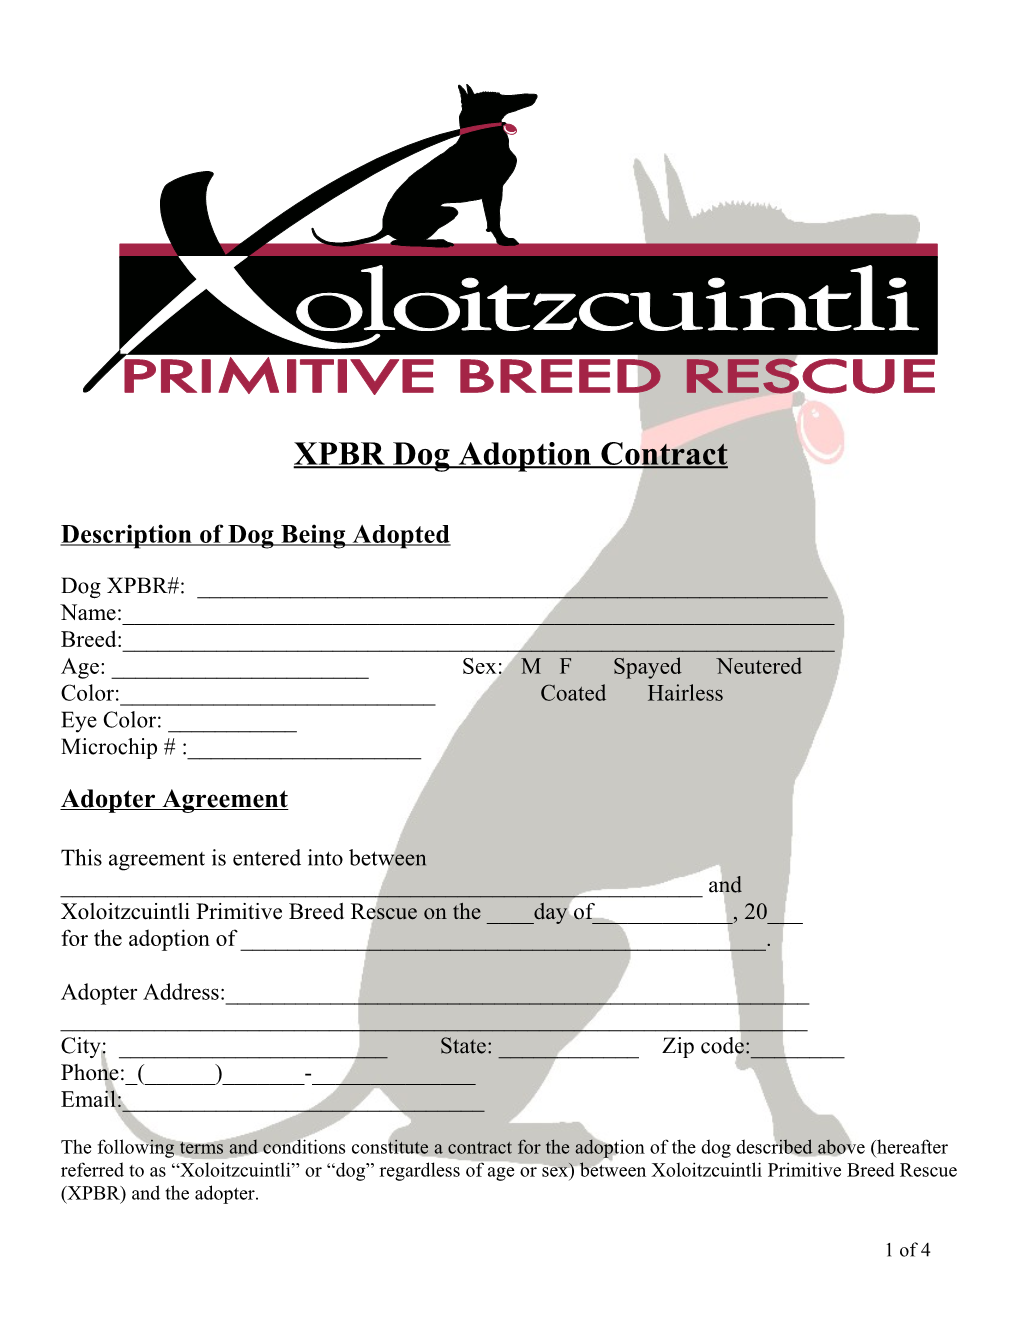 XPBR Dog Adoption Contract